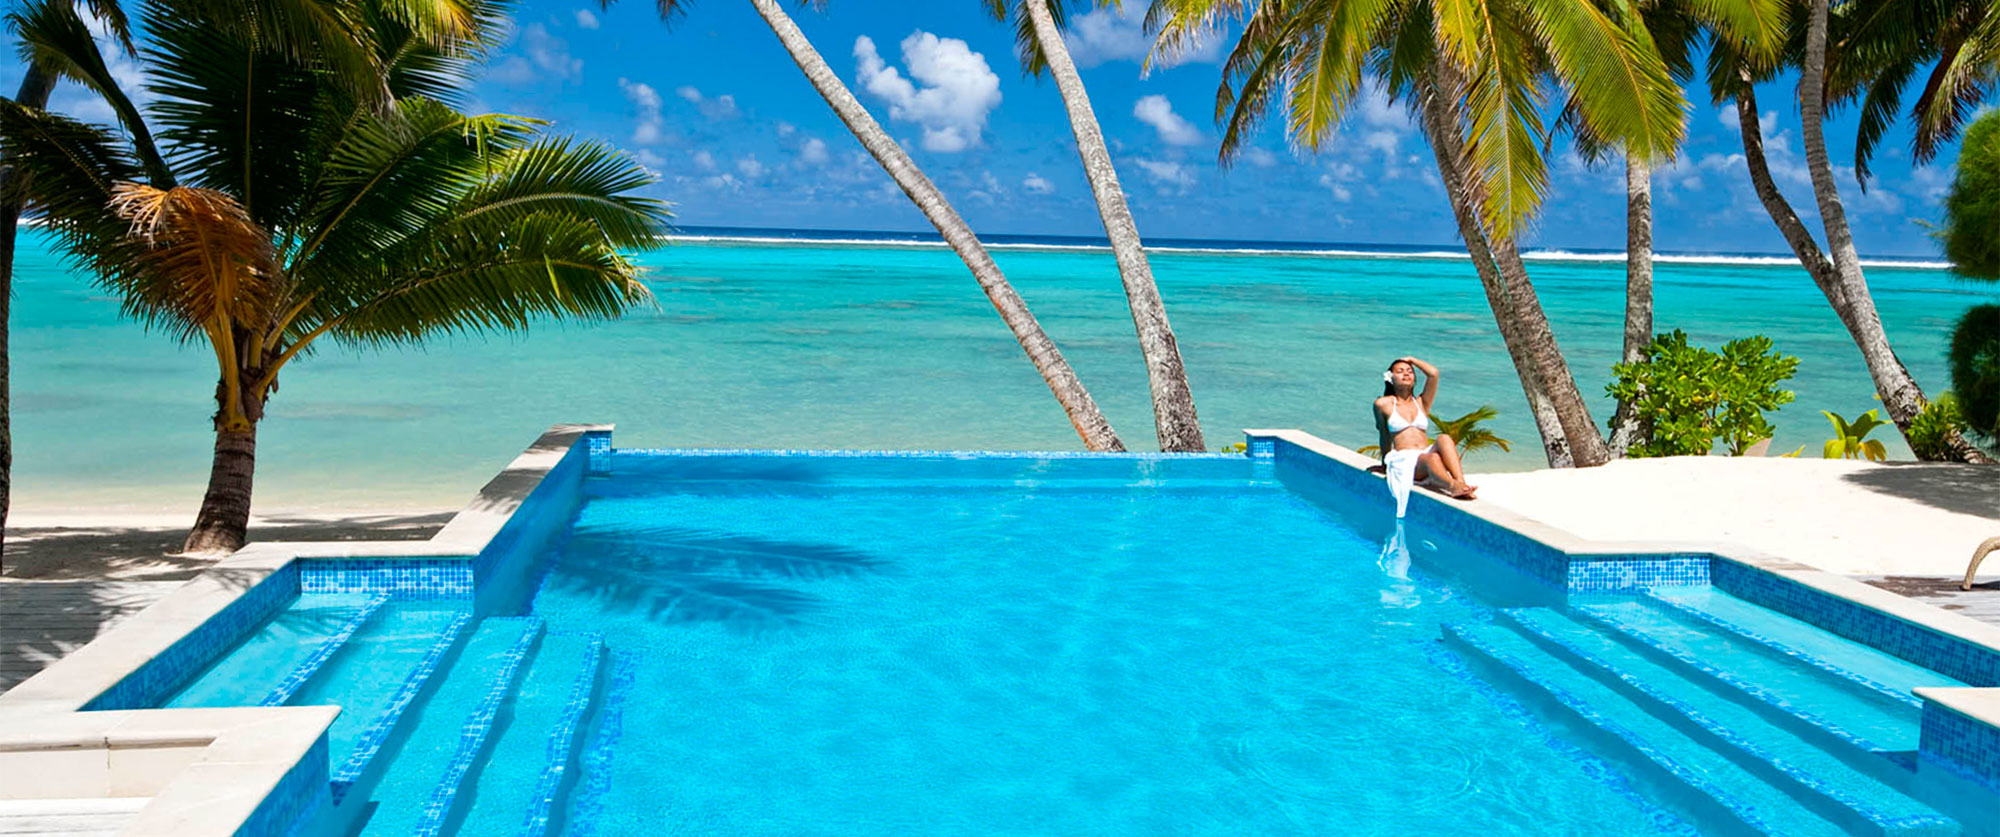 Cook Islands Overwater Bungalow Vacation - Little Polynesian Resort